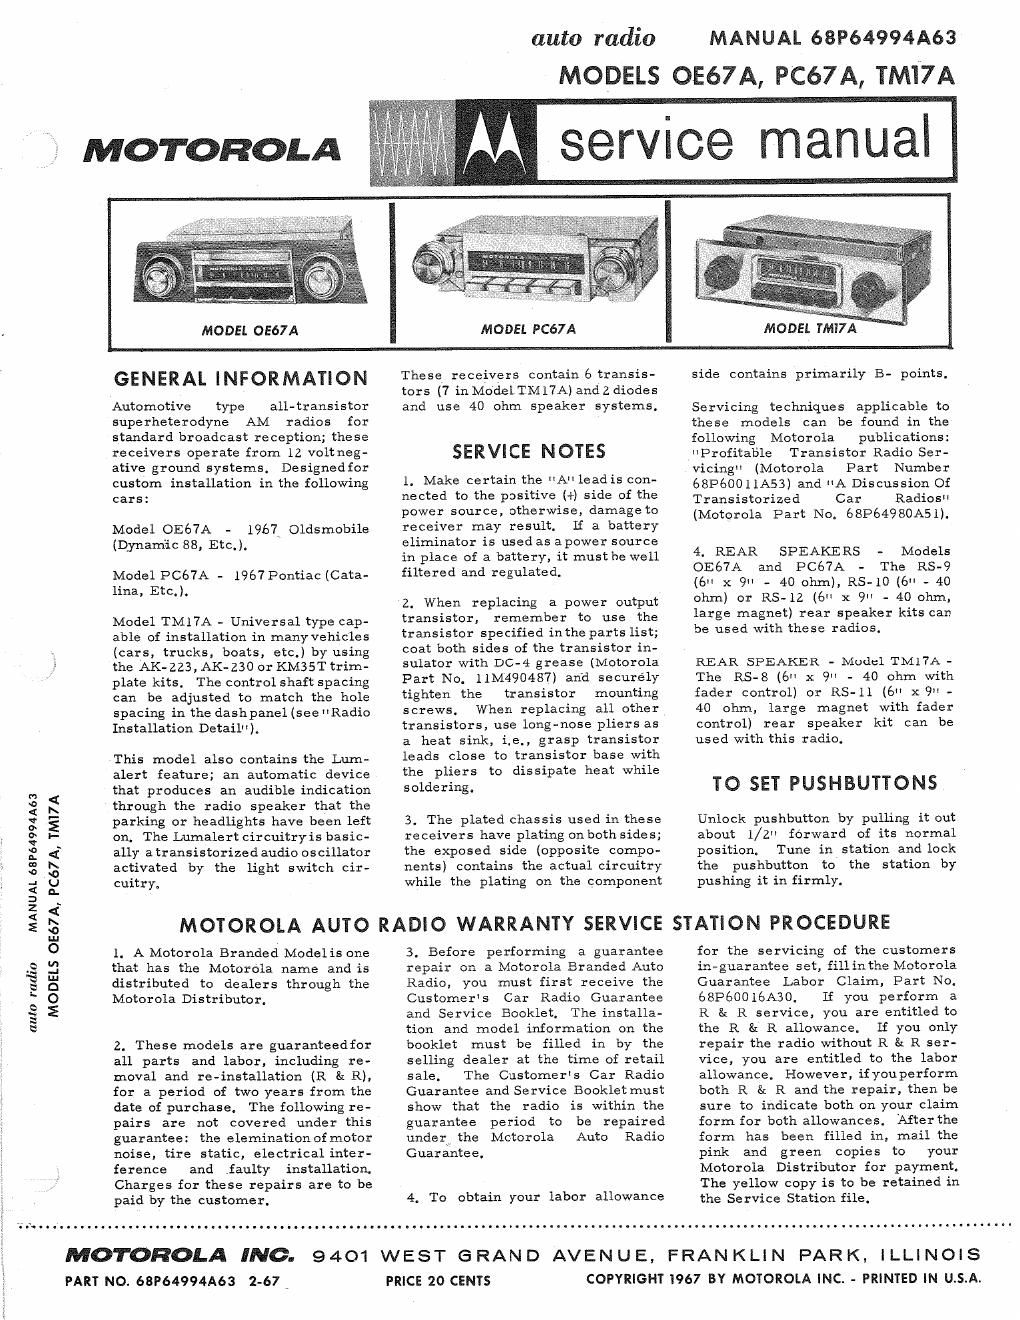 motorola tm 17 a service manual